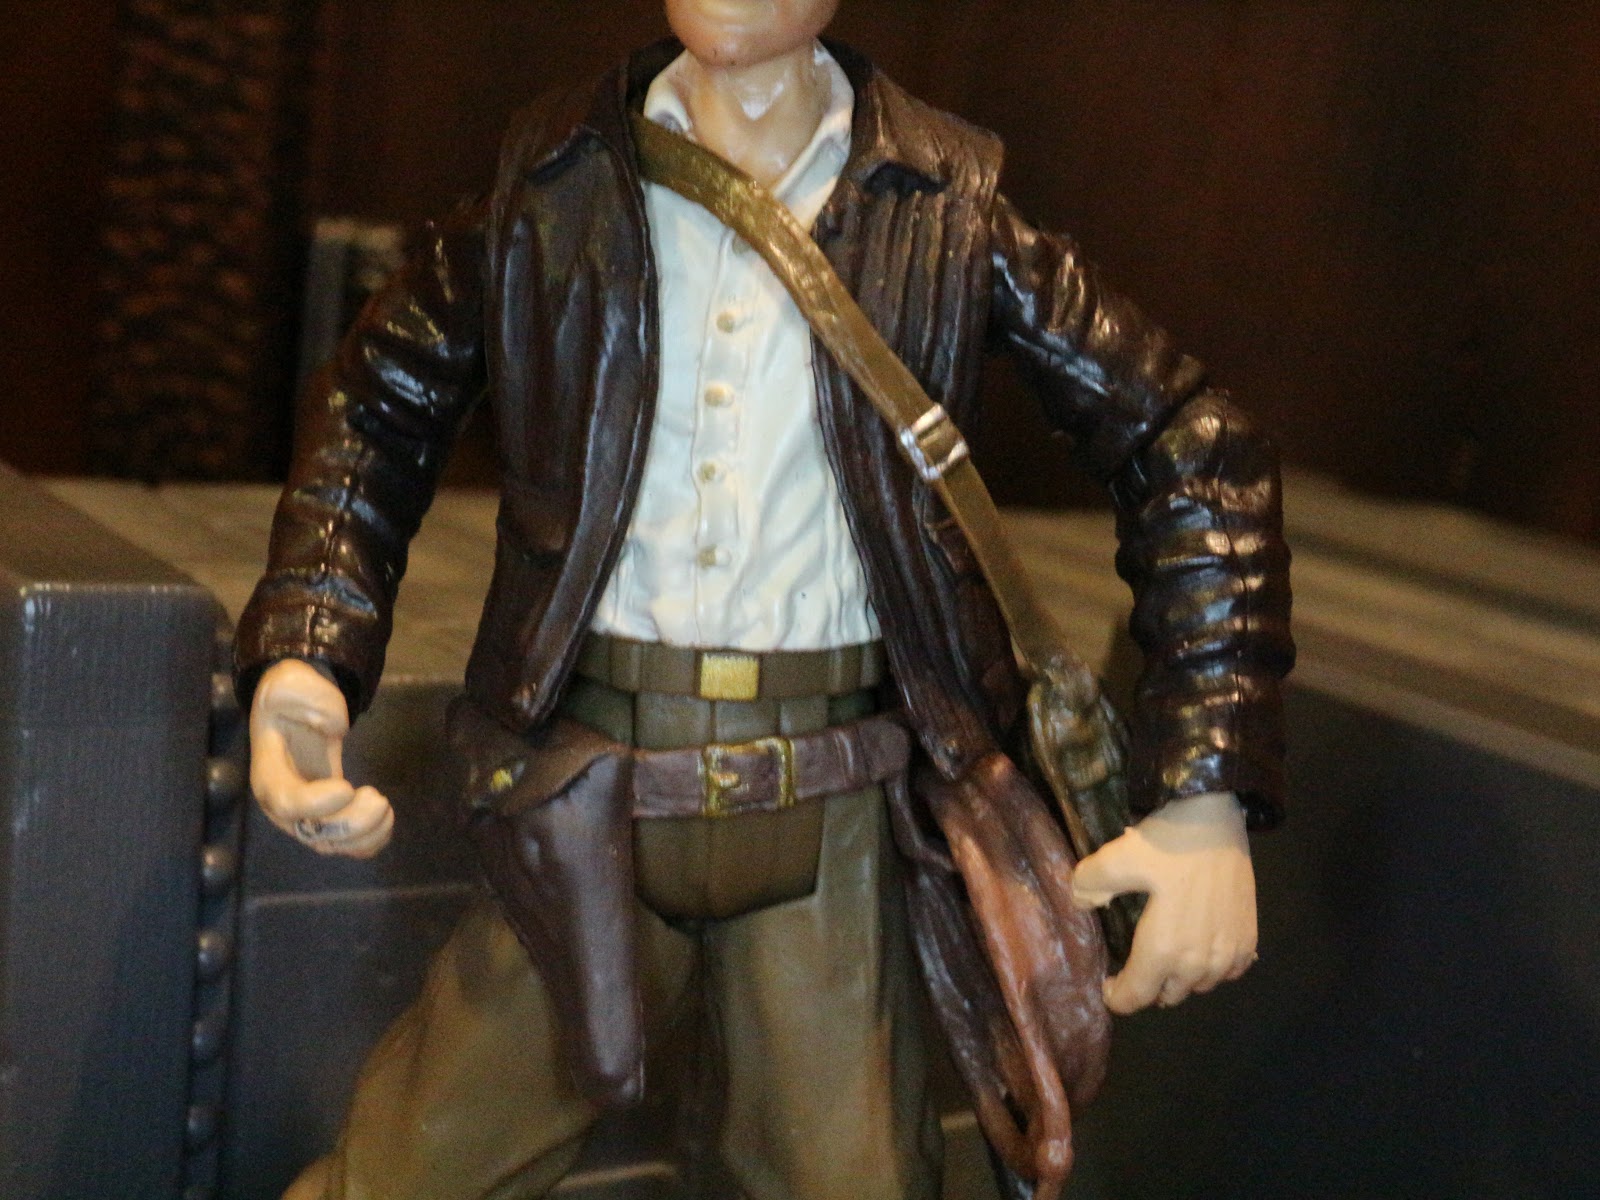 Indiana Jones hasbro Raiders Of The Lost Ark 3.75" Action Figure boy toy gift 